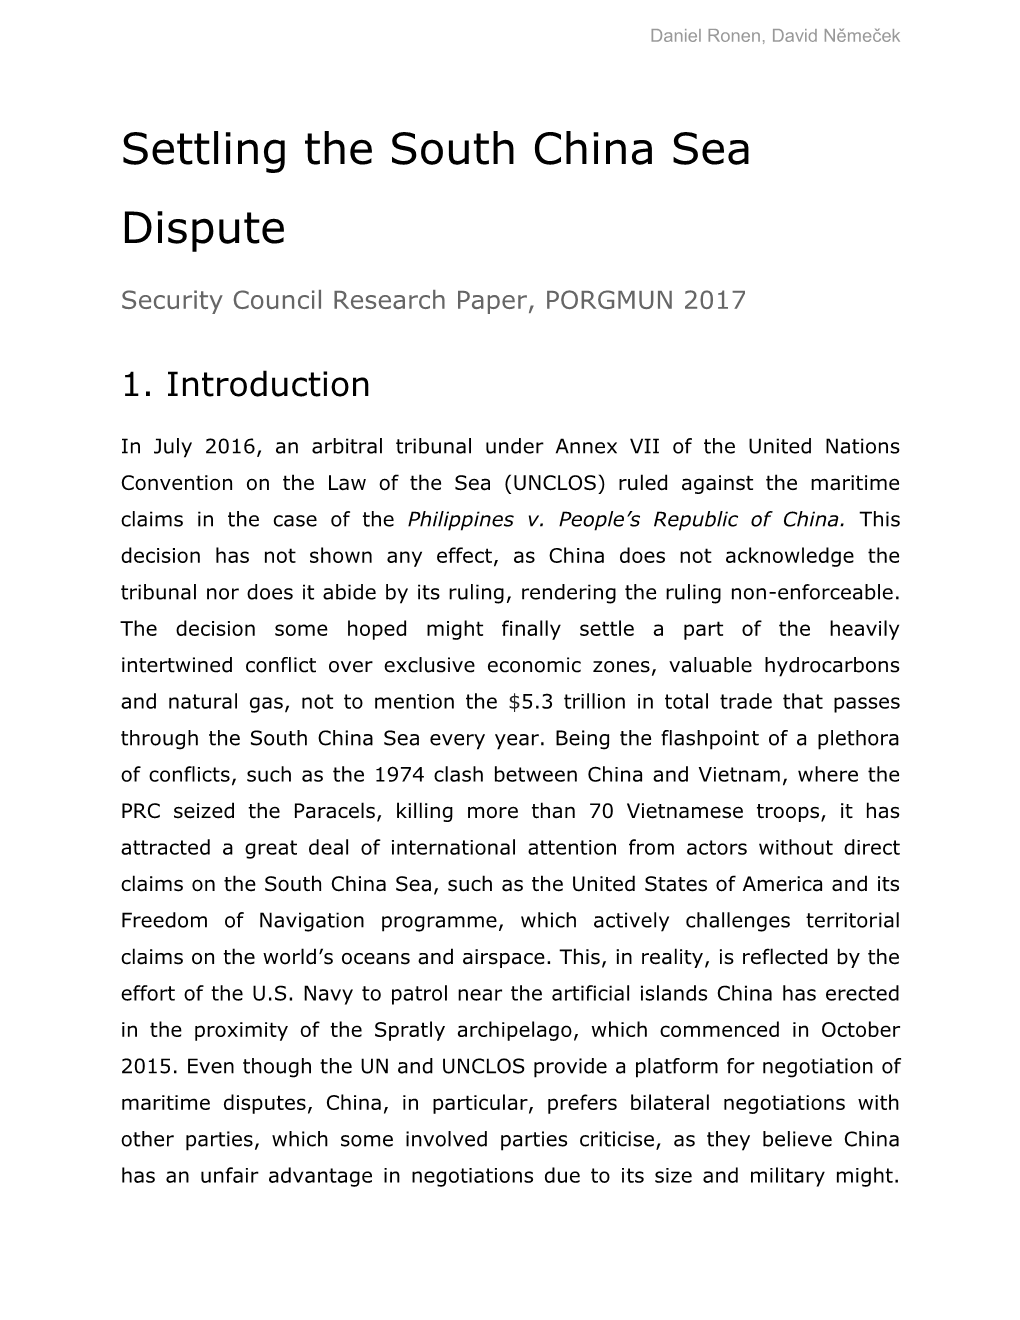 Settling the South China Sea Dispute